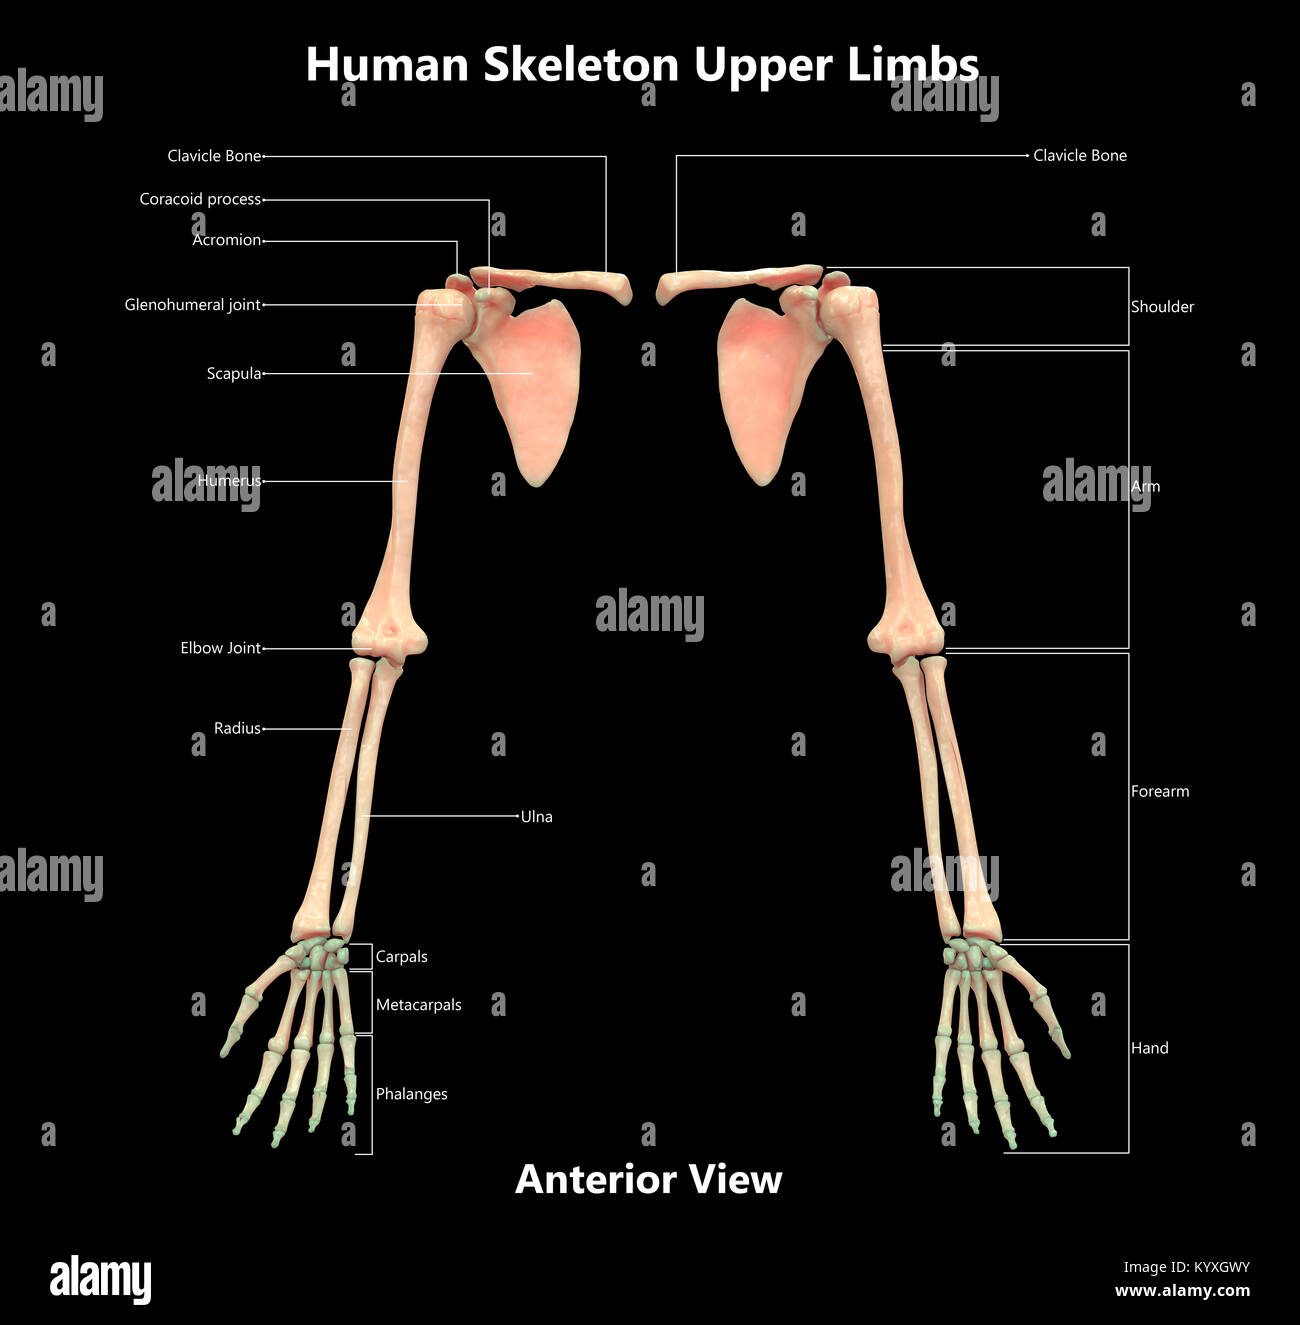 Human Skeleton System Upper Limbs Label Design Anterior View Anatomy Stock Photo